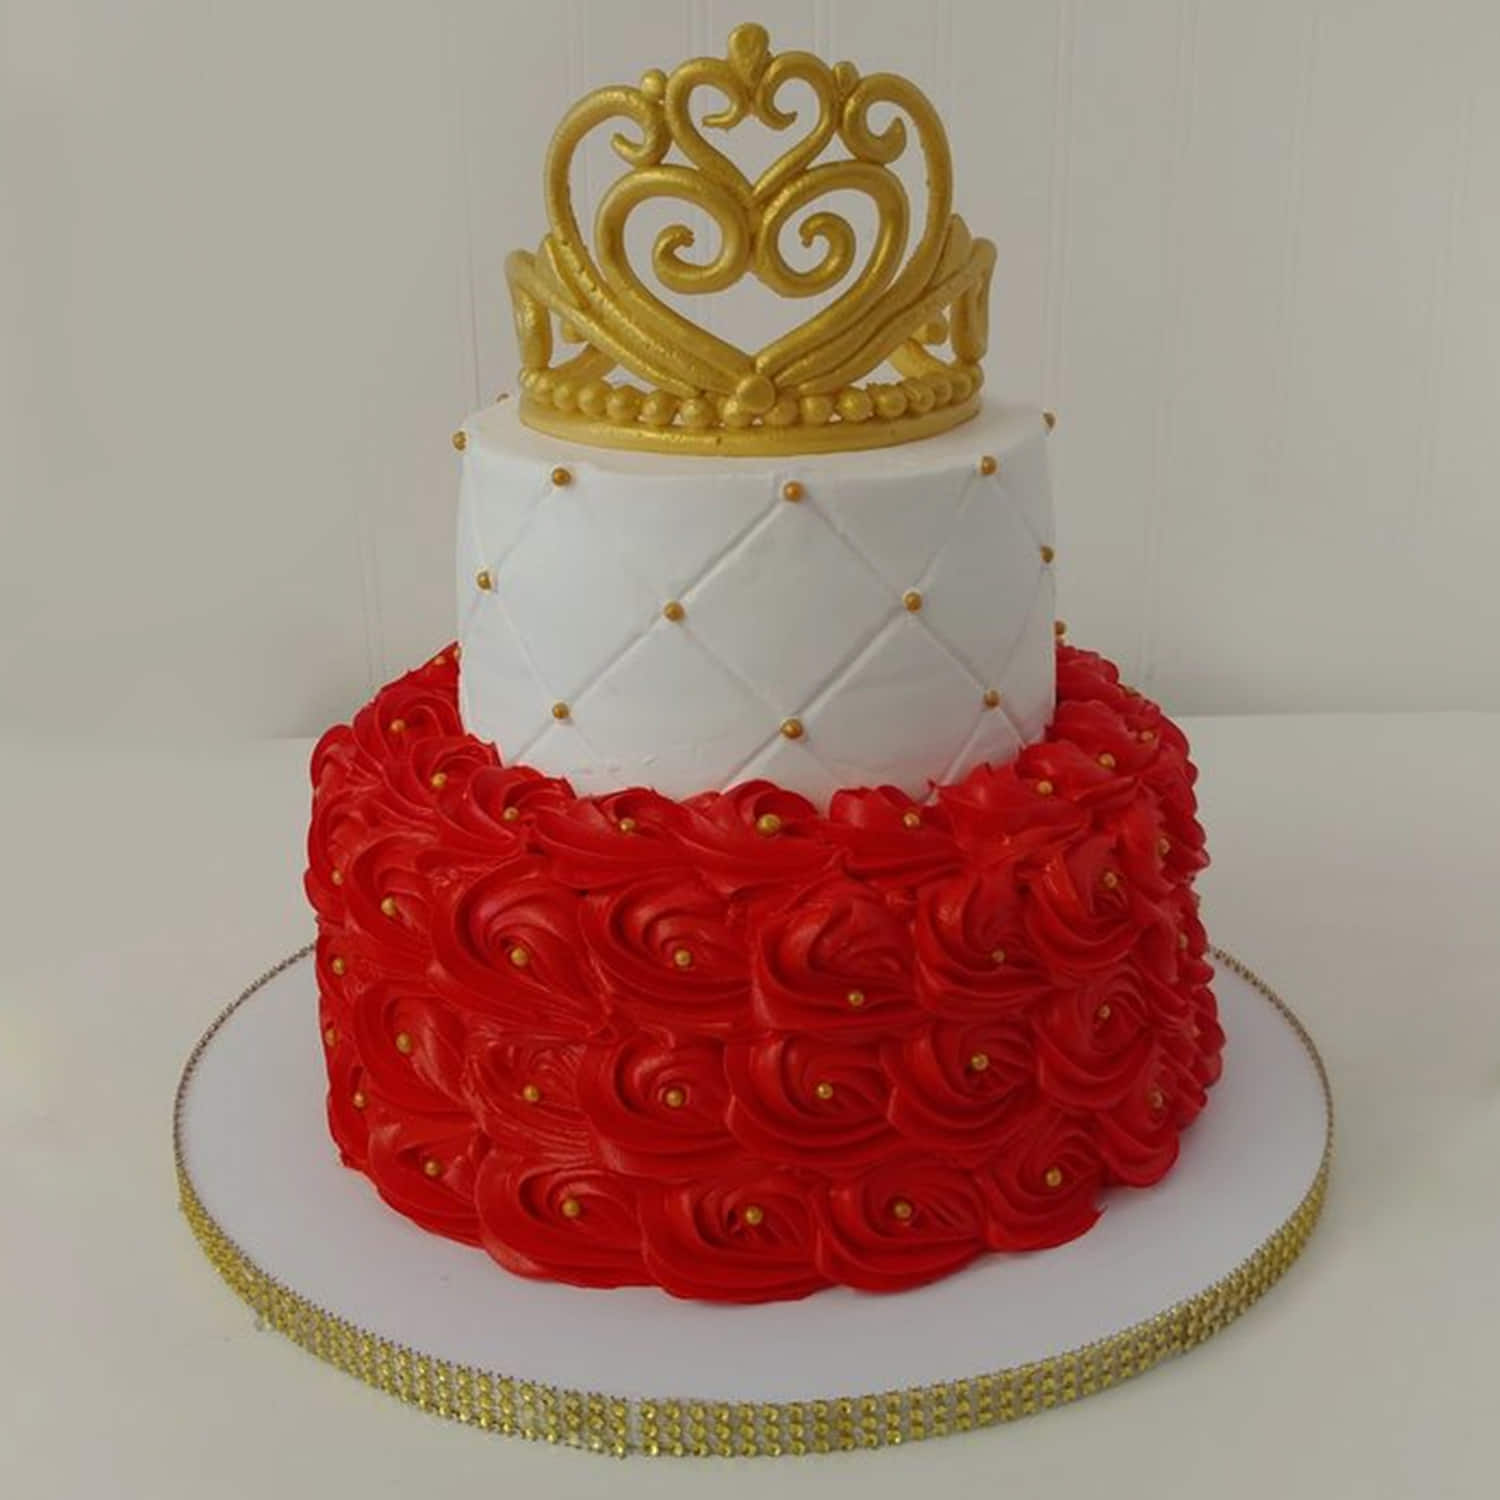 Princess Crown Cake (How to Make a Pillow Cake)